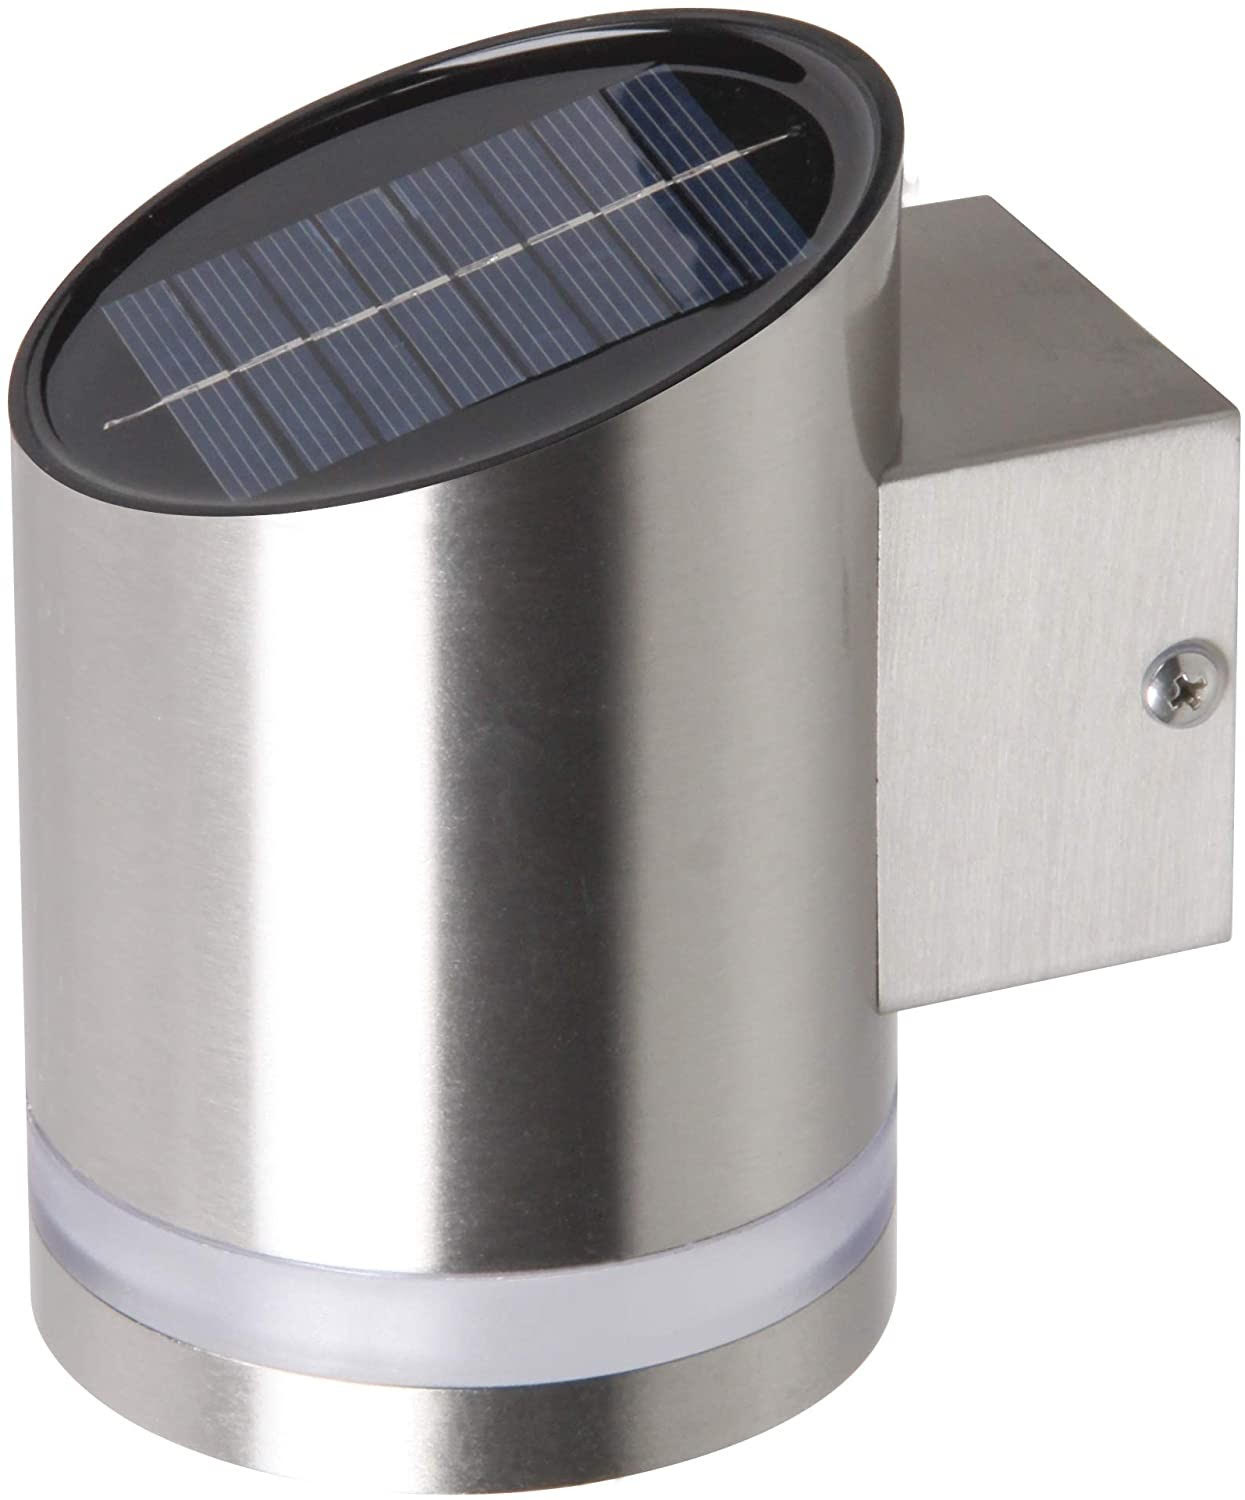 Stainless steel solar wall light